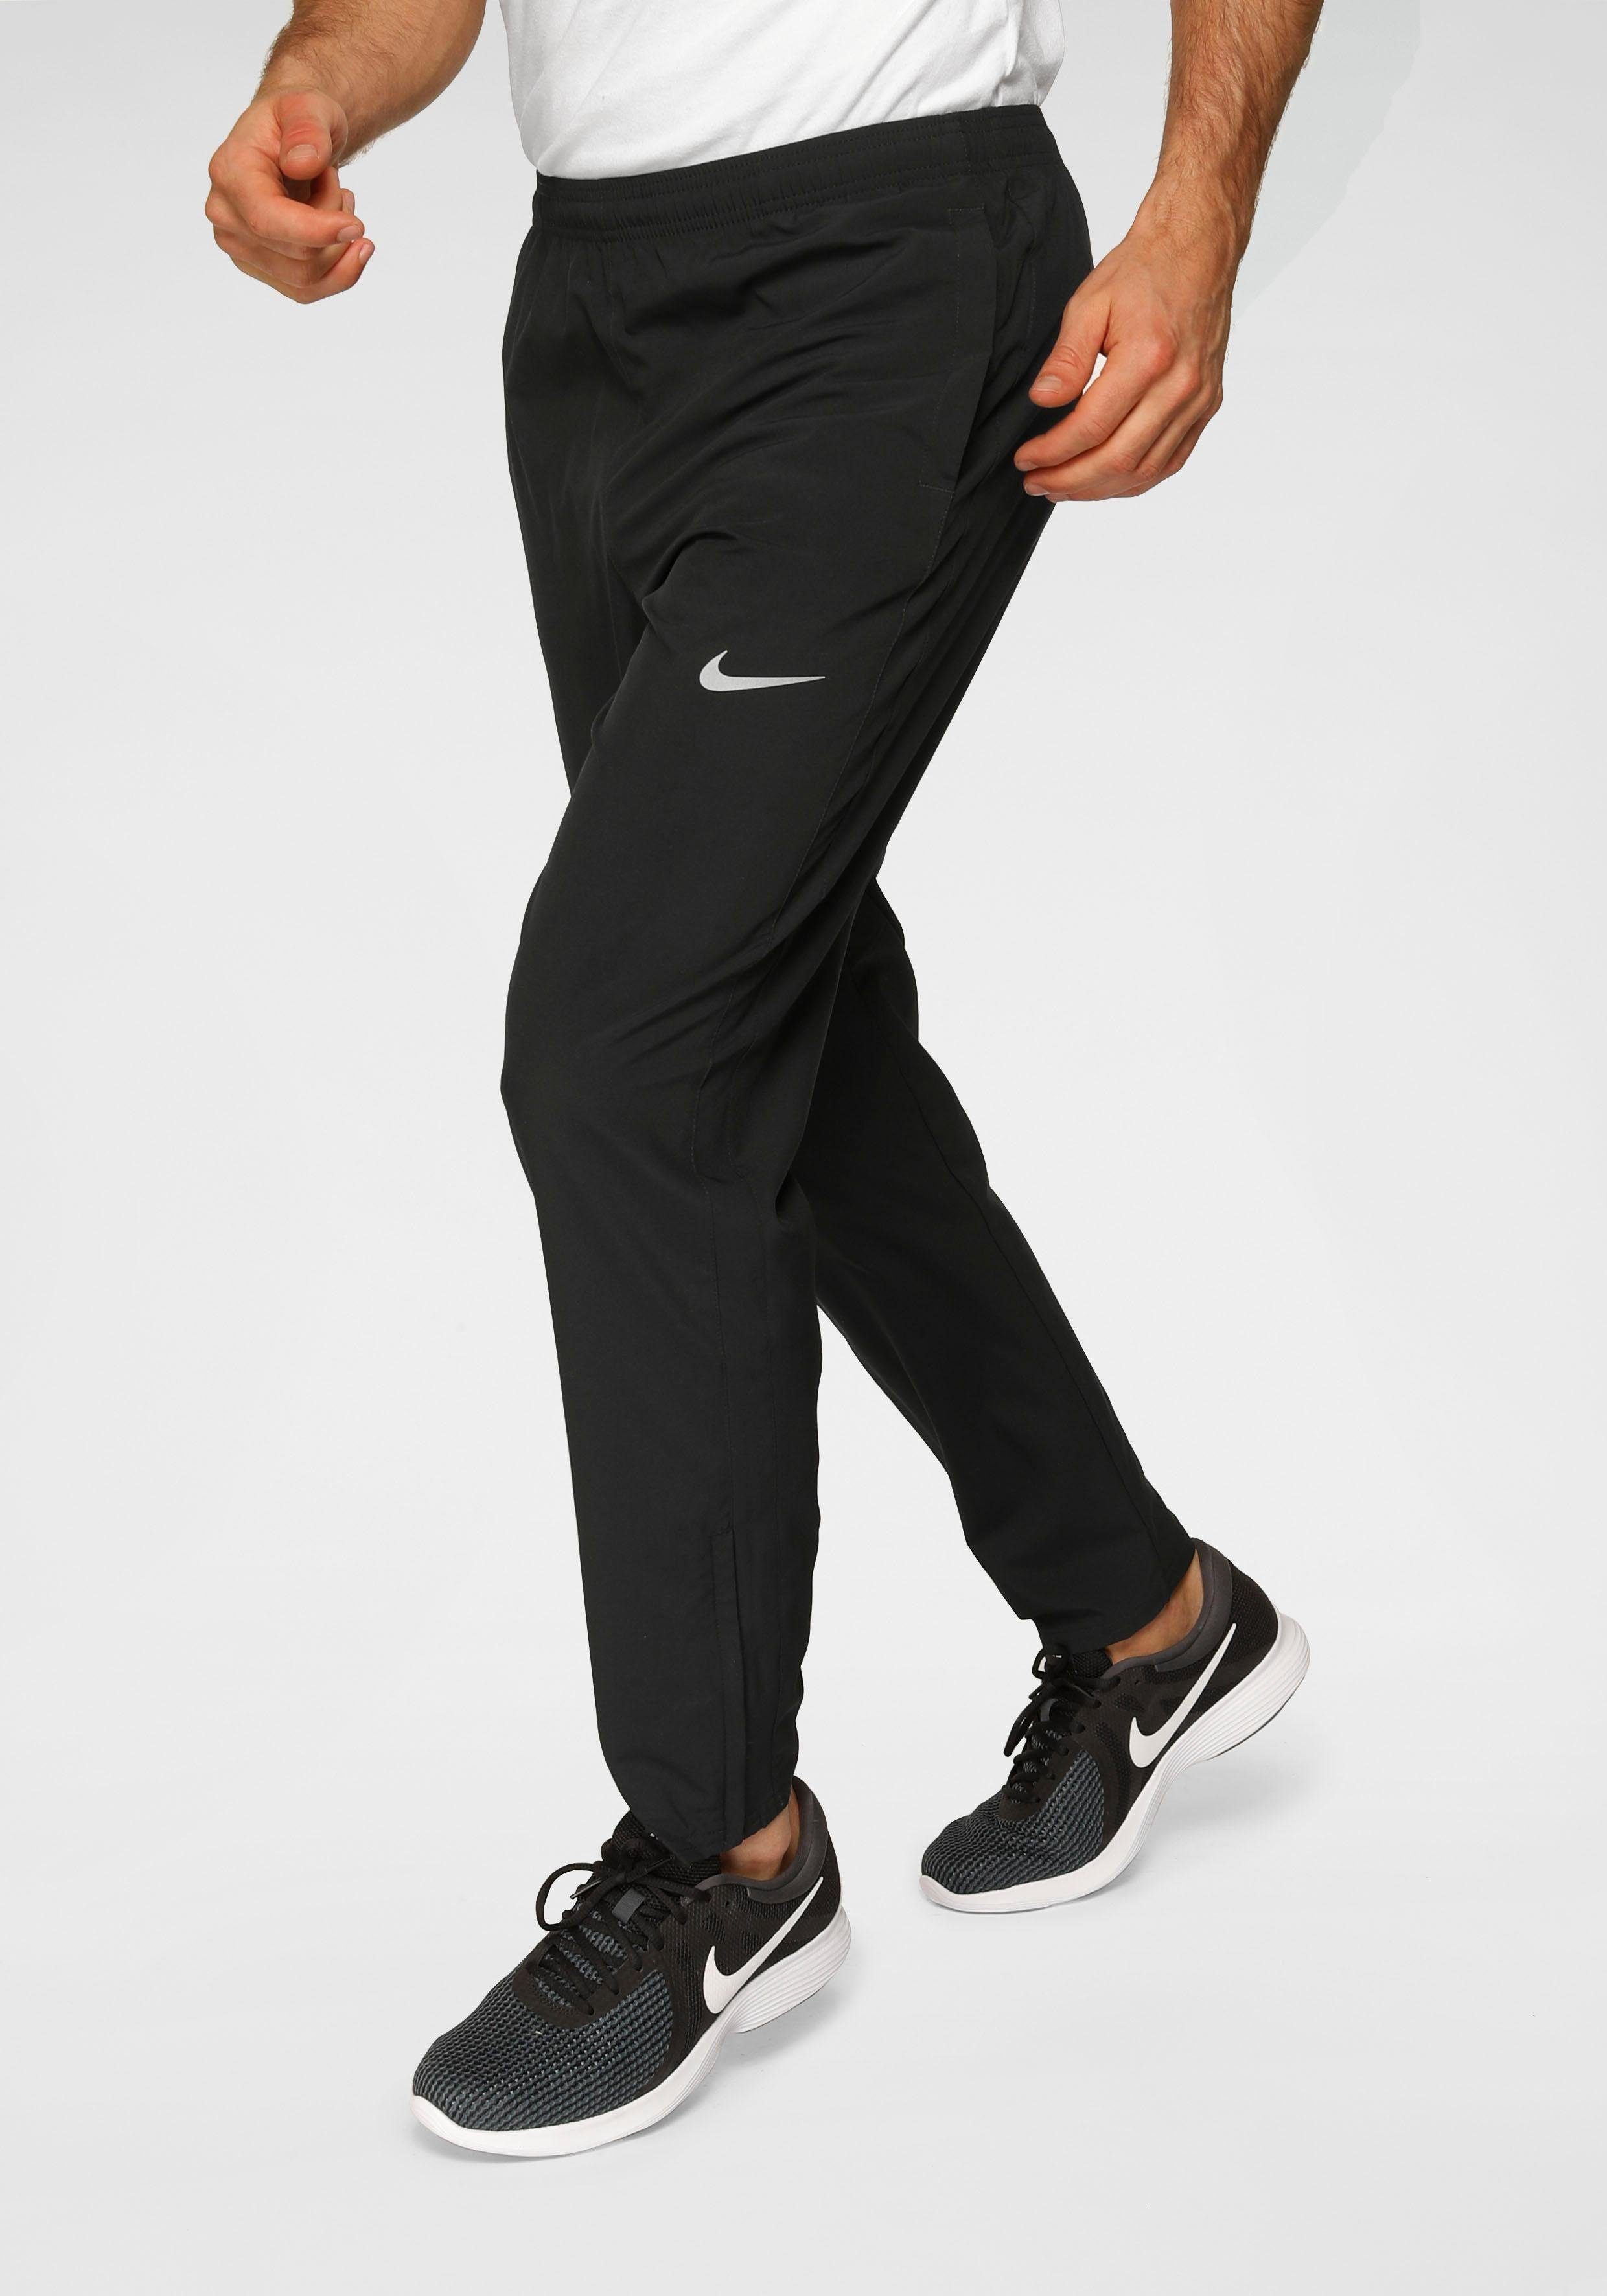 Nike Laufhose M Nk Run Stripe Woven Pant online kaufen | OTTO